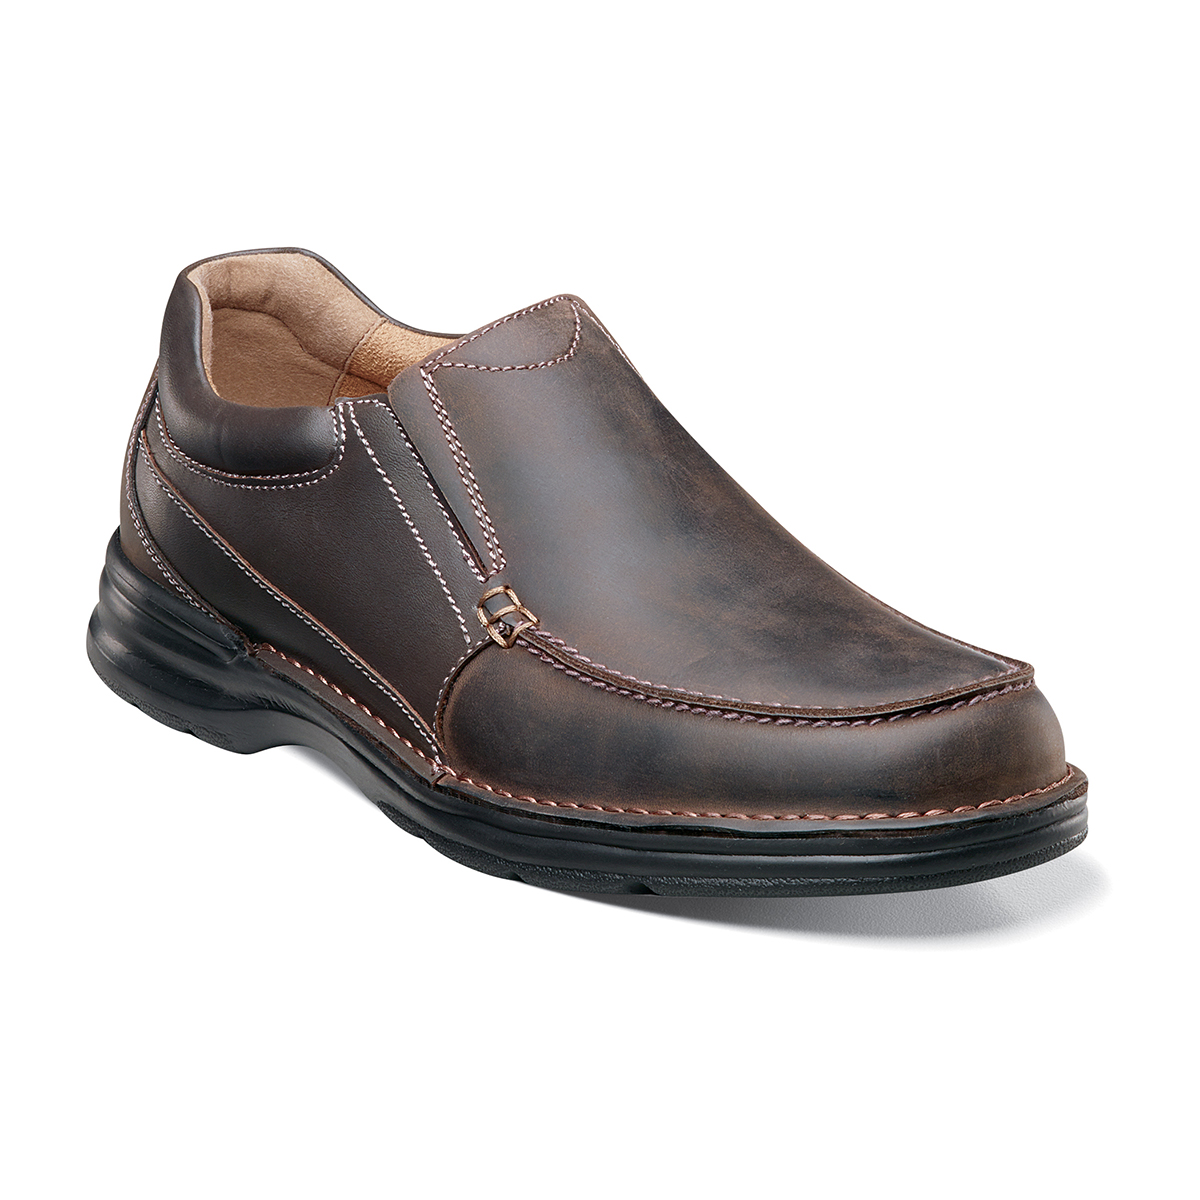 Men's Casual Shoes | Brown CH Moc Toe Slip On | Nunn Bush Patterson